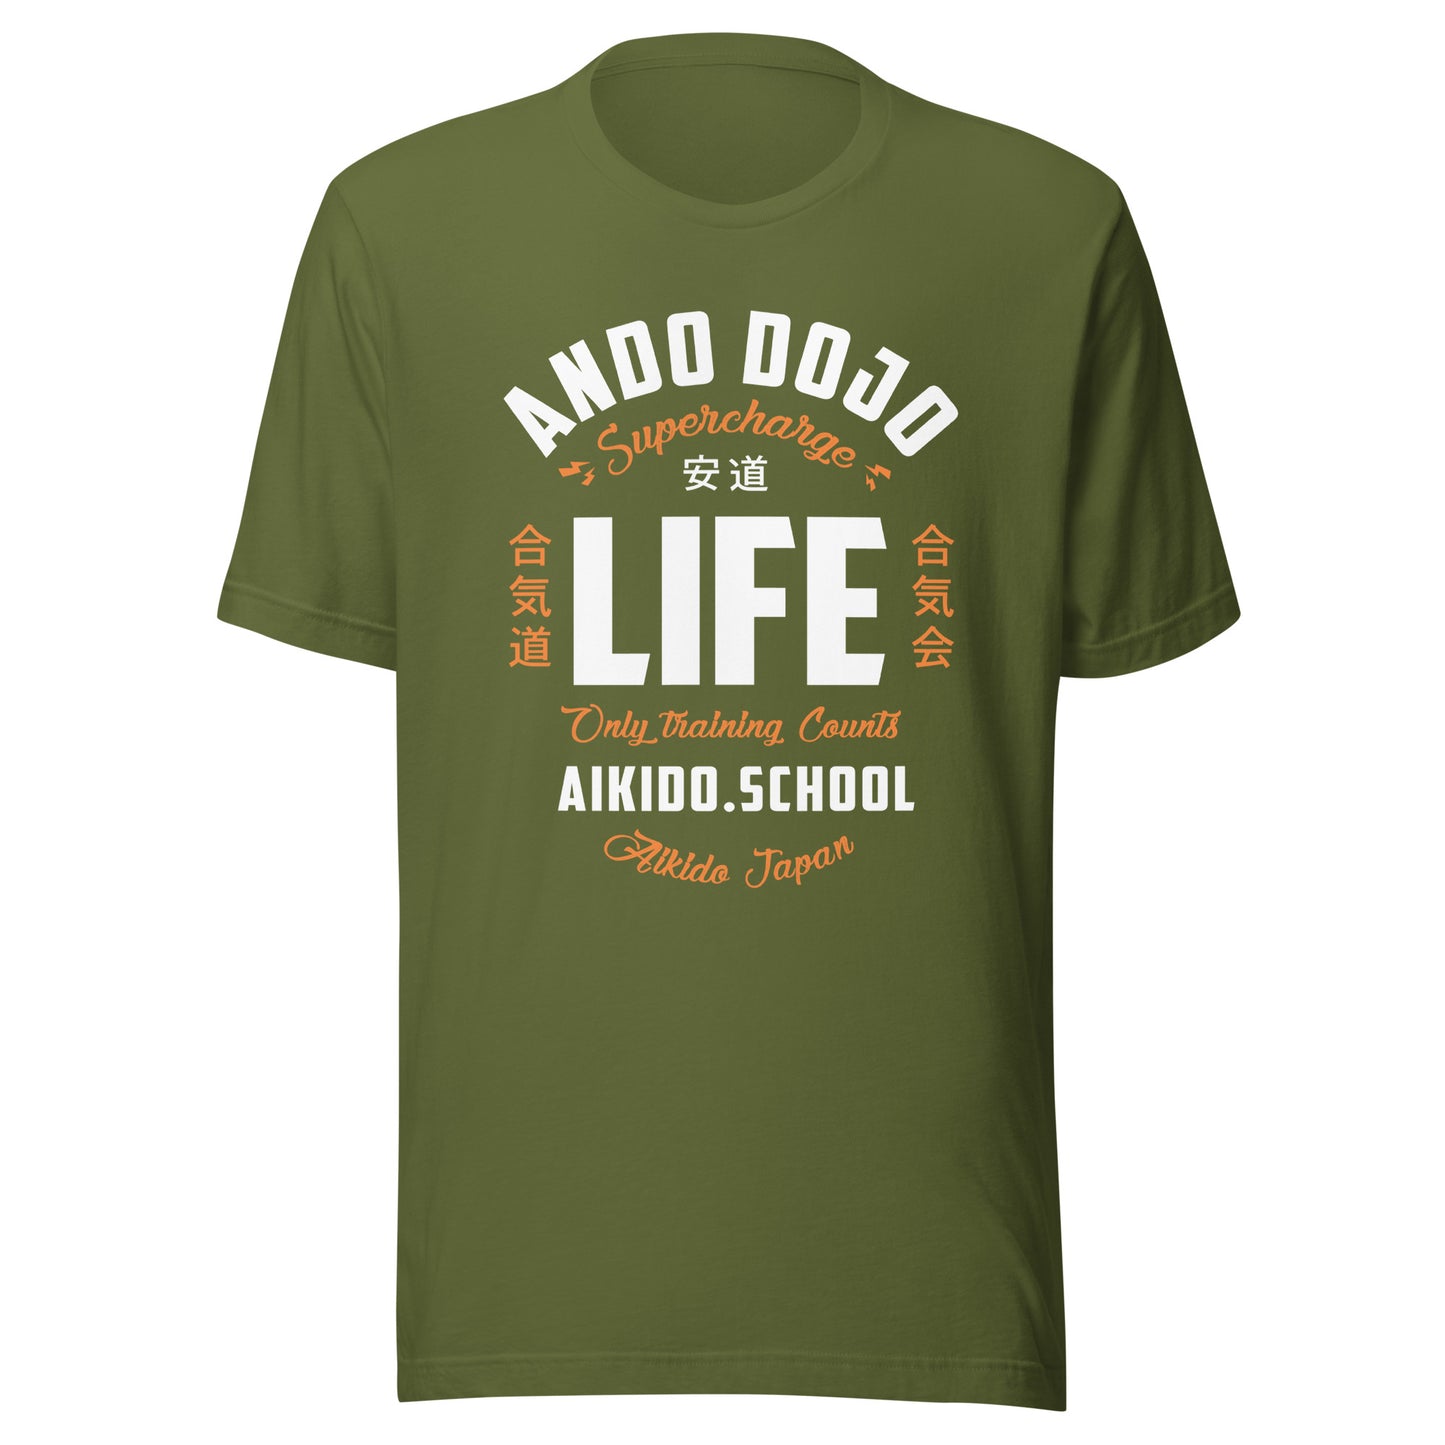 Aikido Life - by Ando